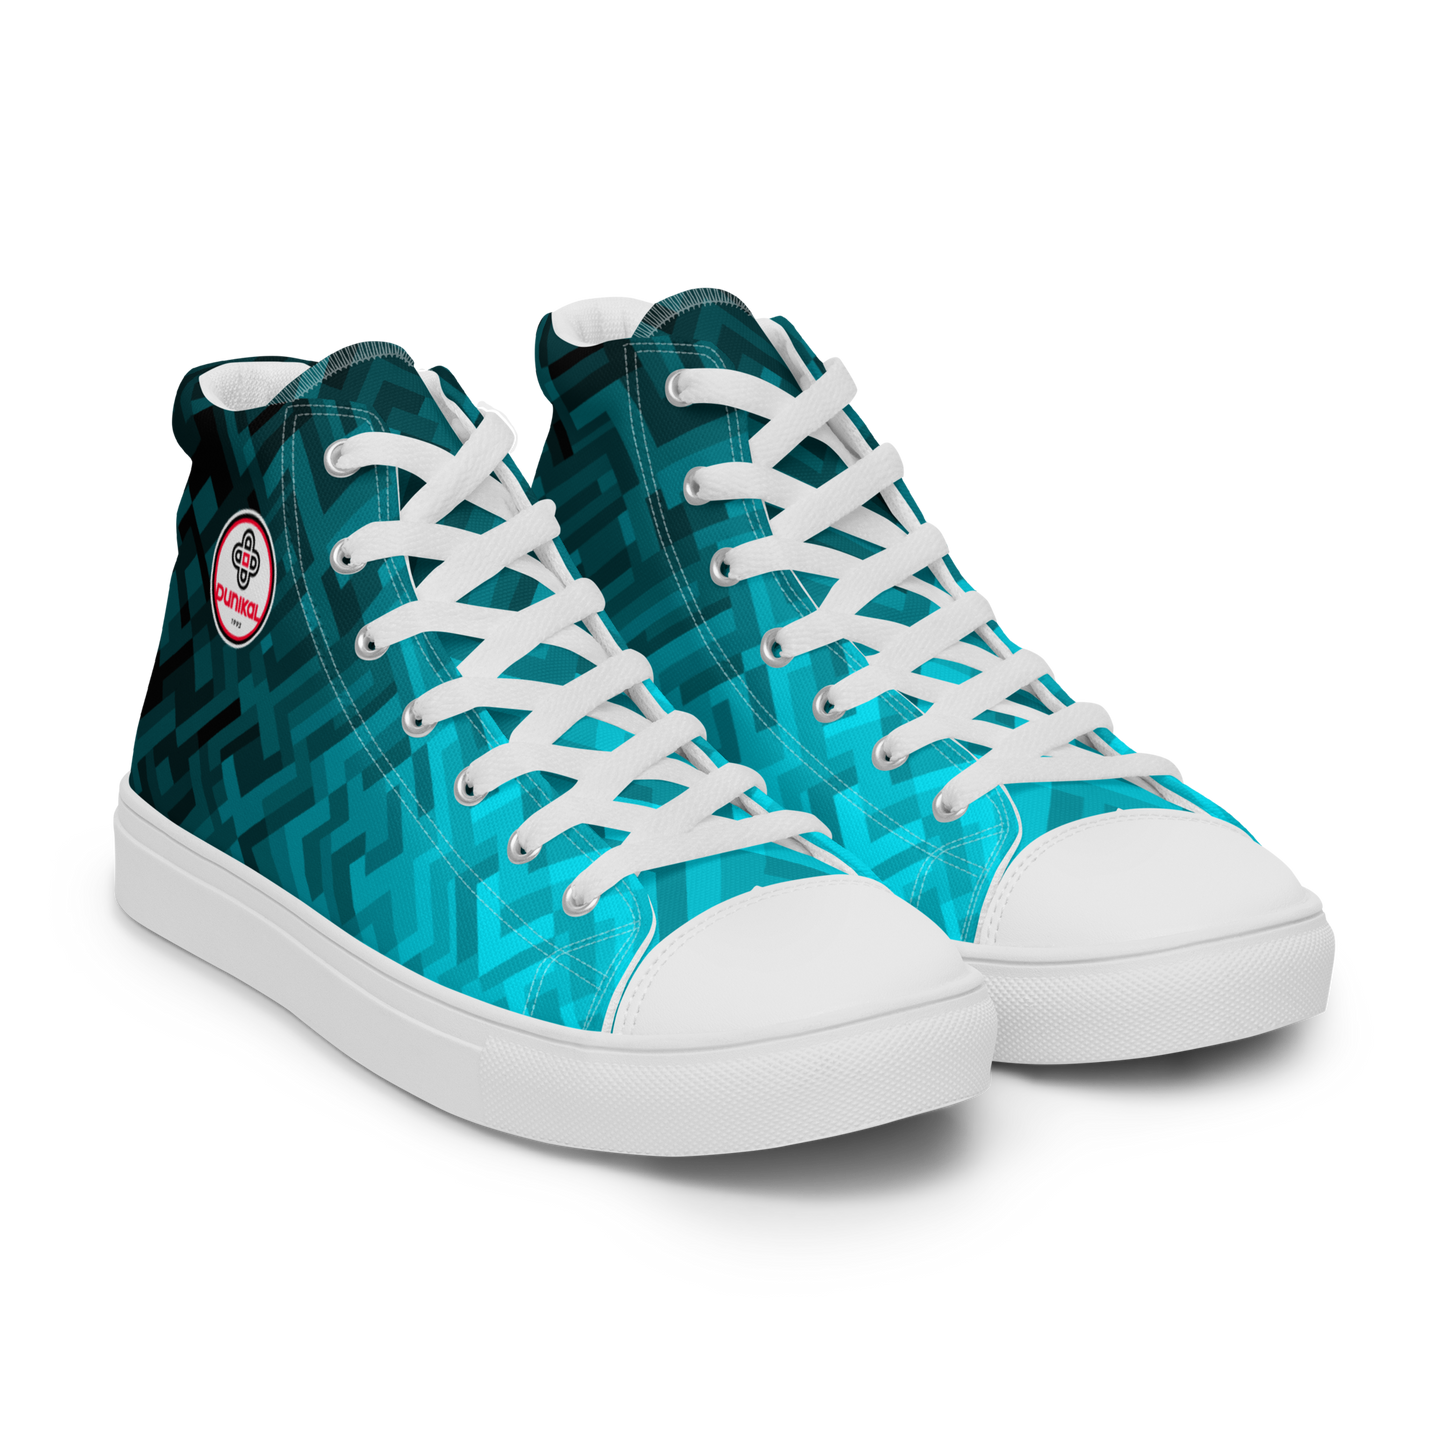 Women's Canvas Sneakers ❯ Polygonal Gradient ❯ Springboard